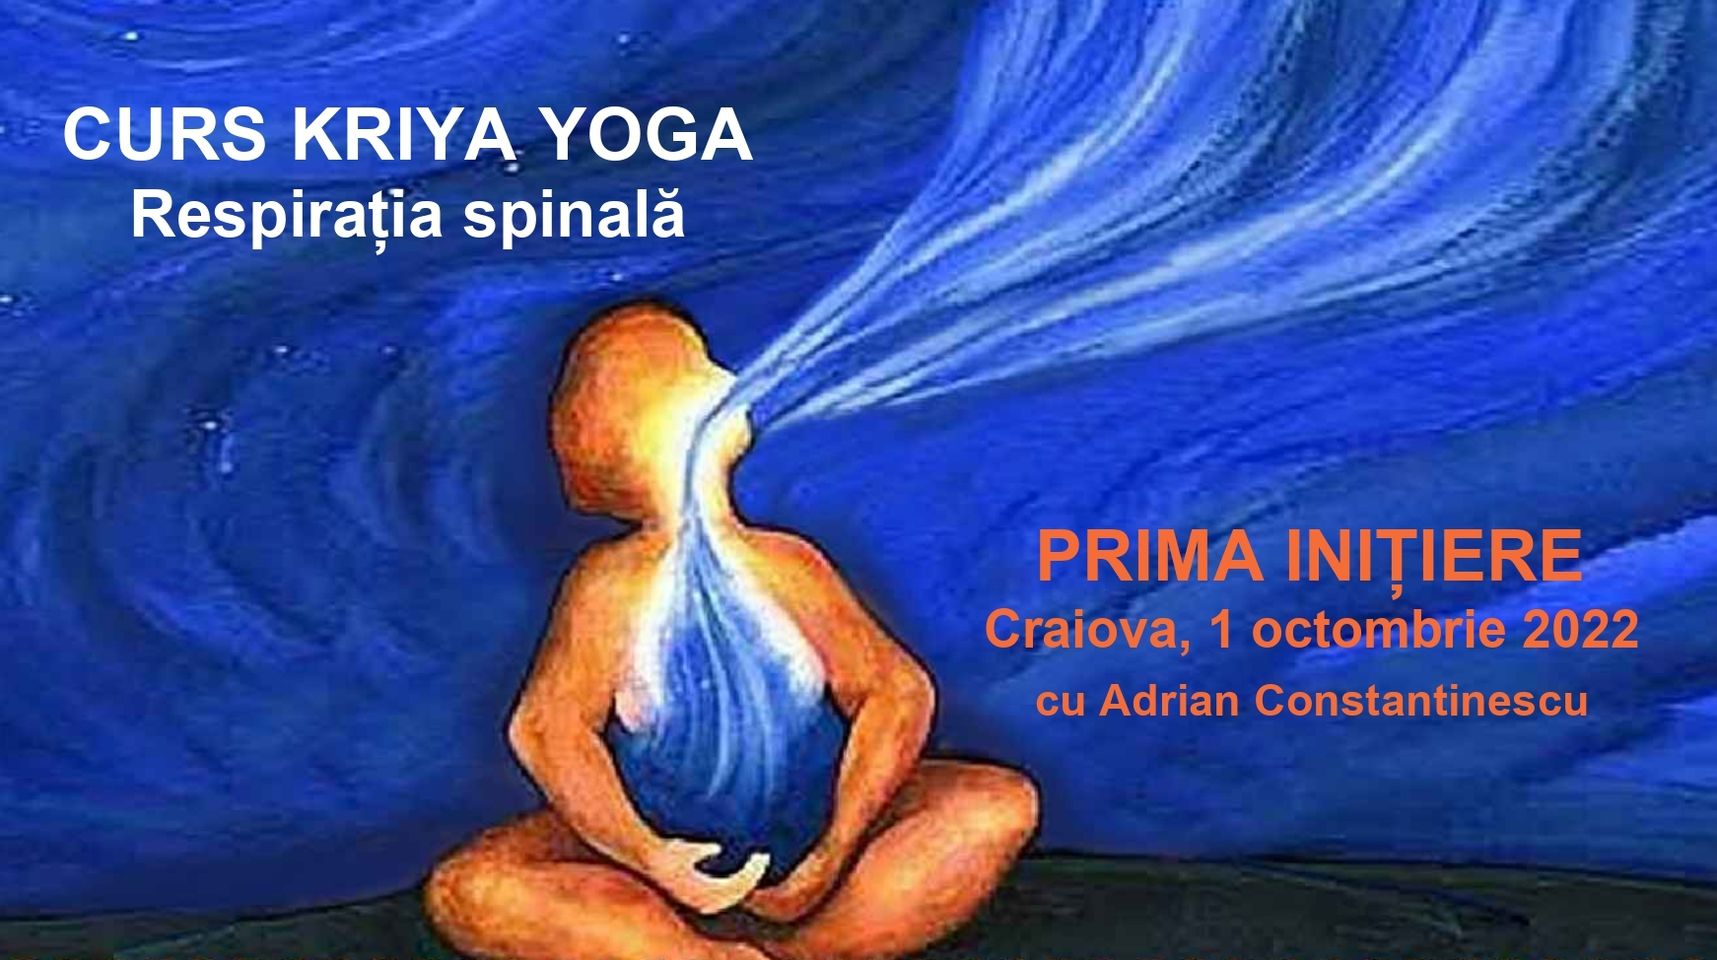 Kryia Yoga respiratie spinala Craiova NLP